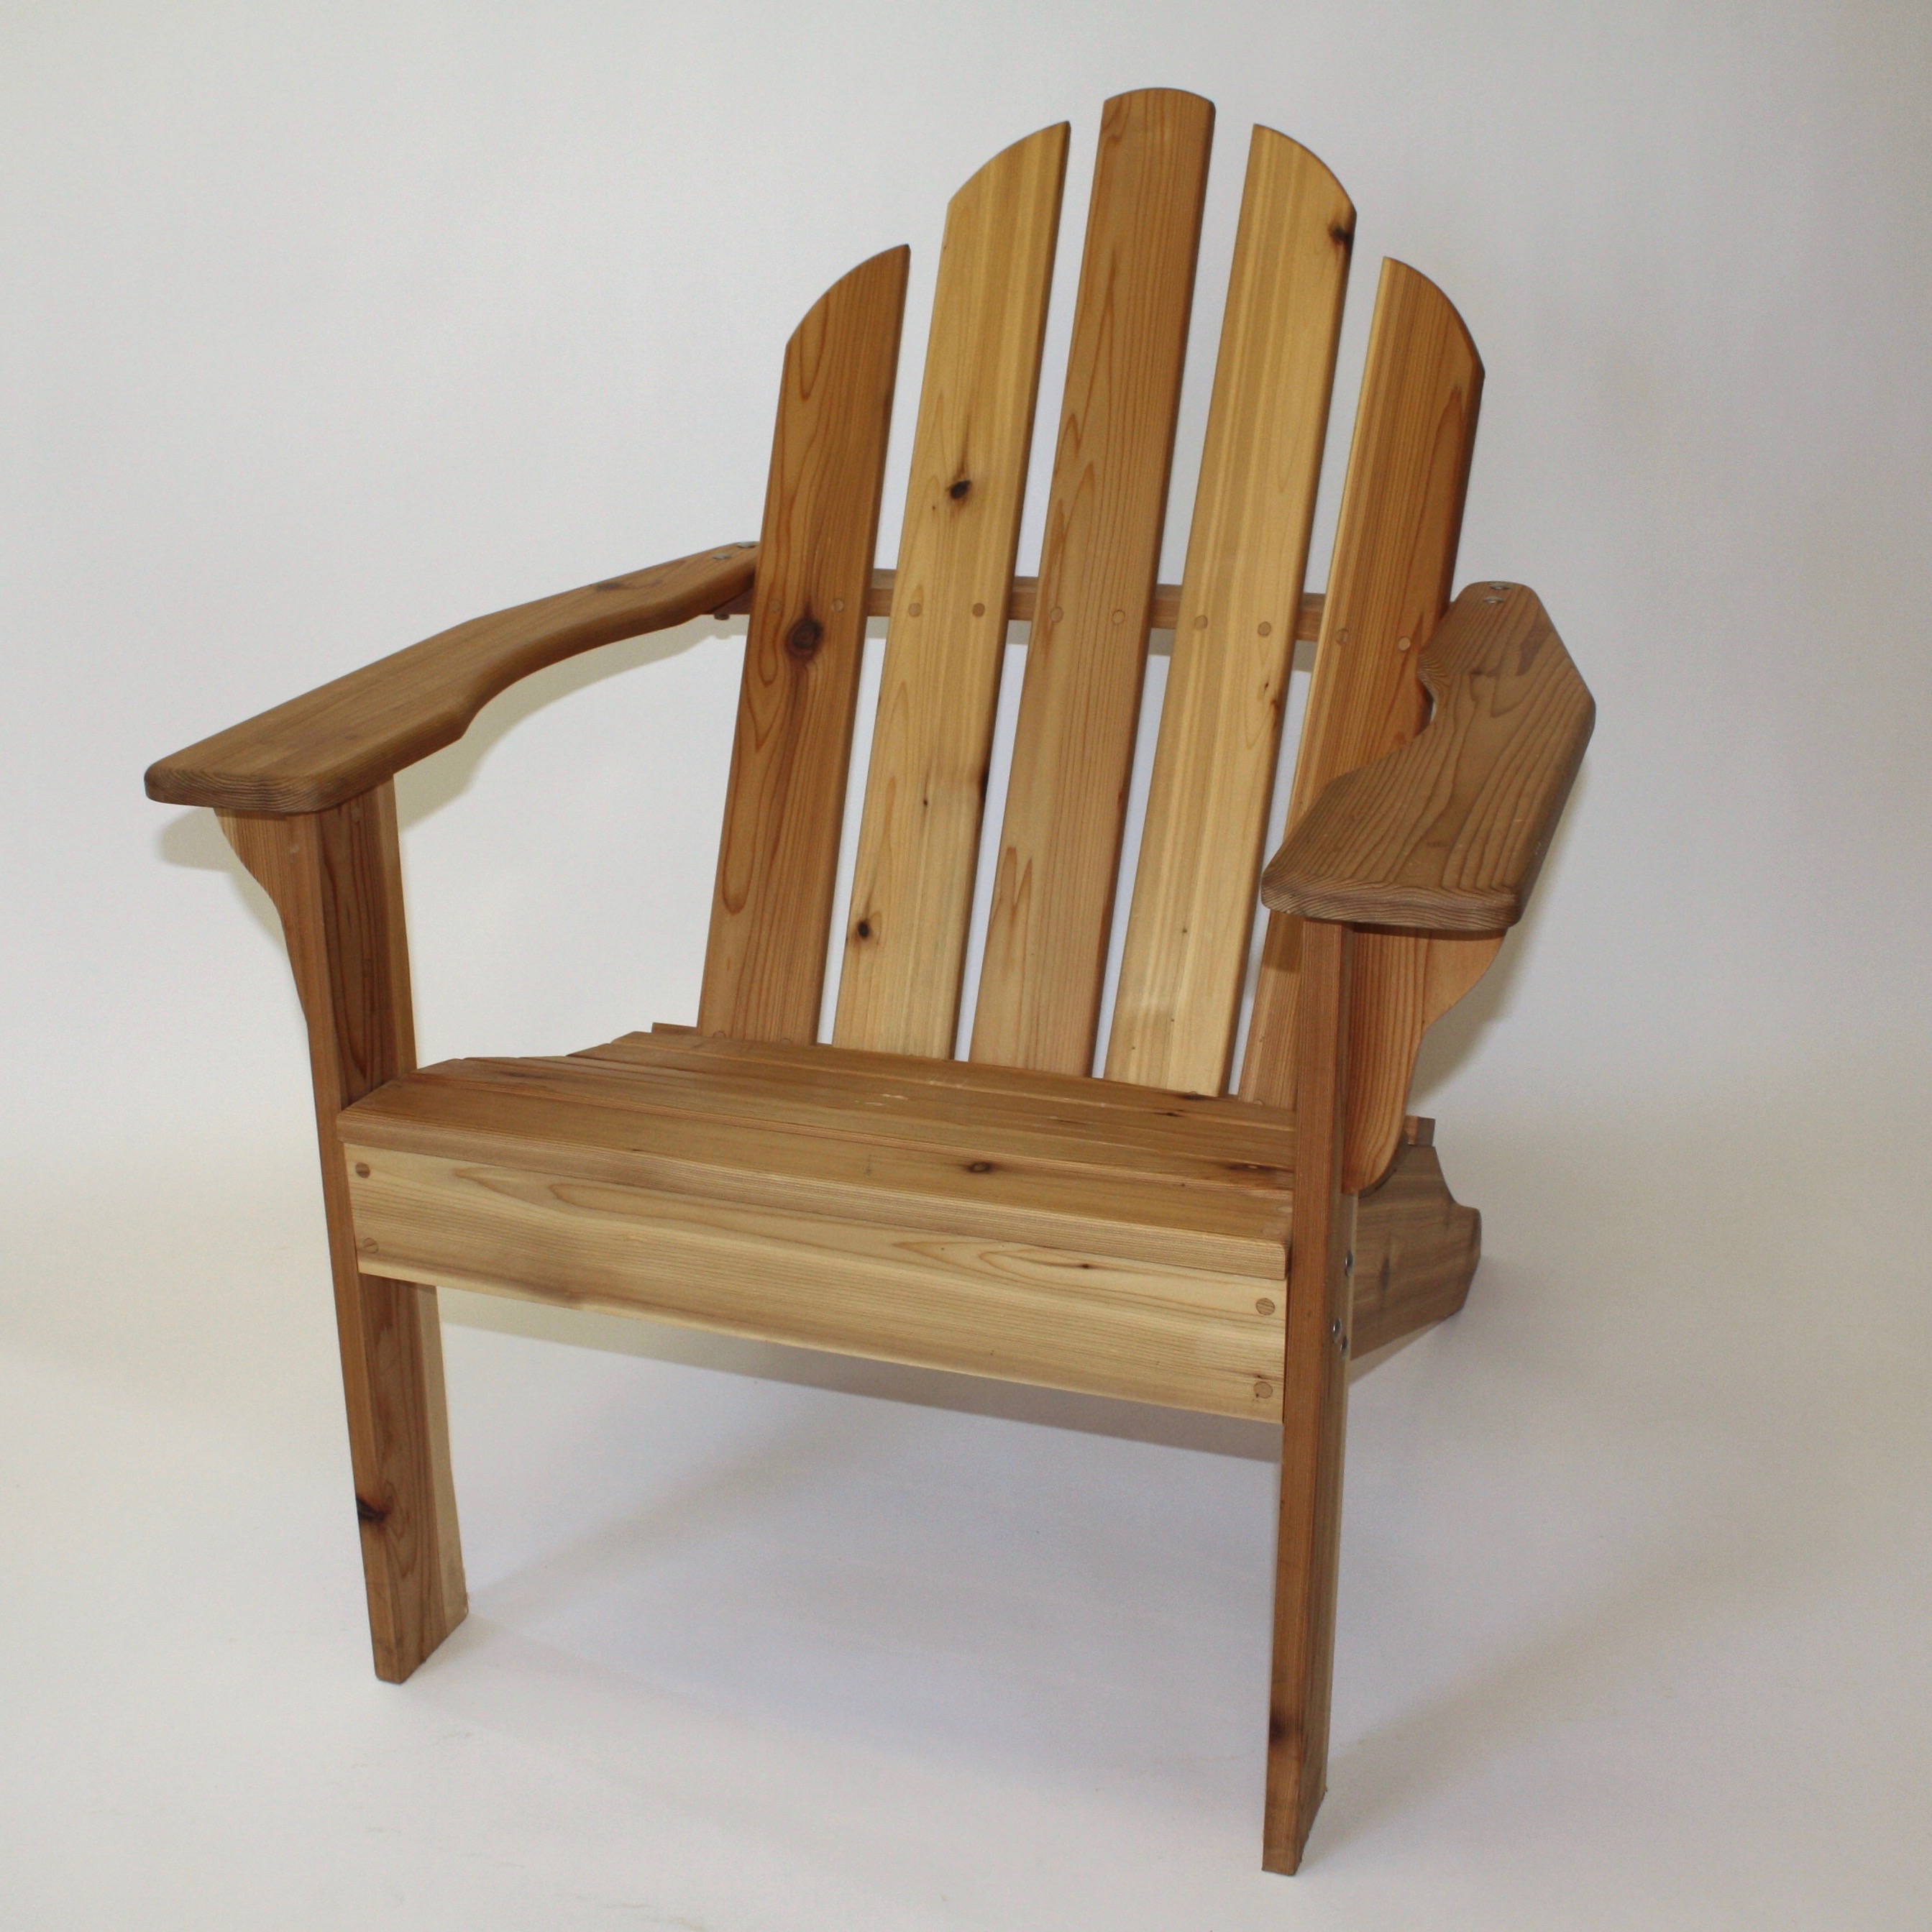 Build an Adirondack Chair – Weeknight – The Workbench